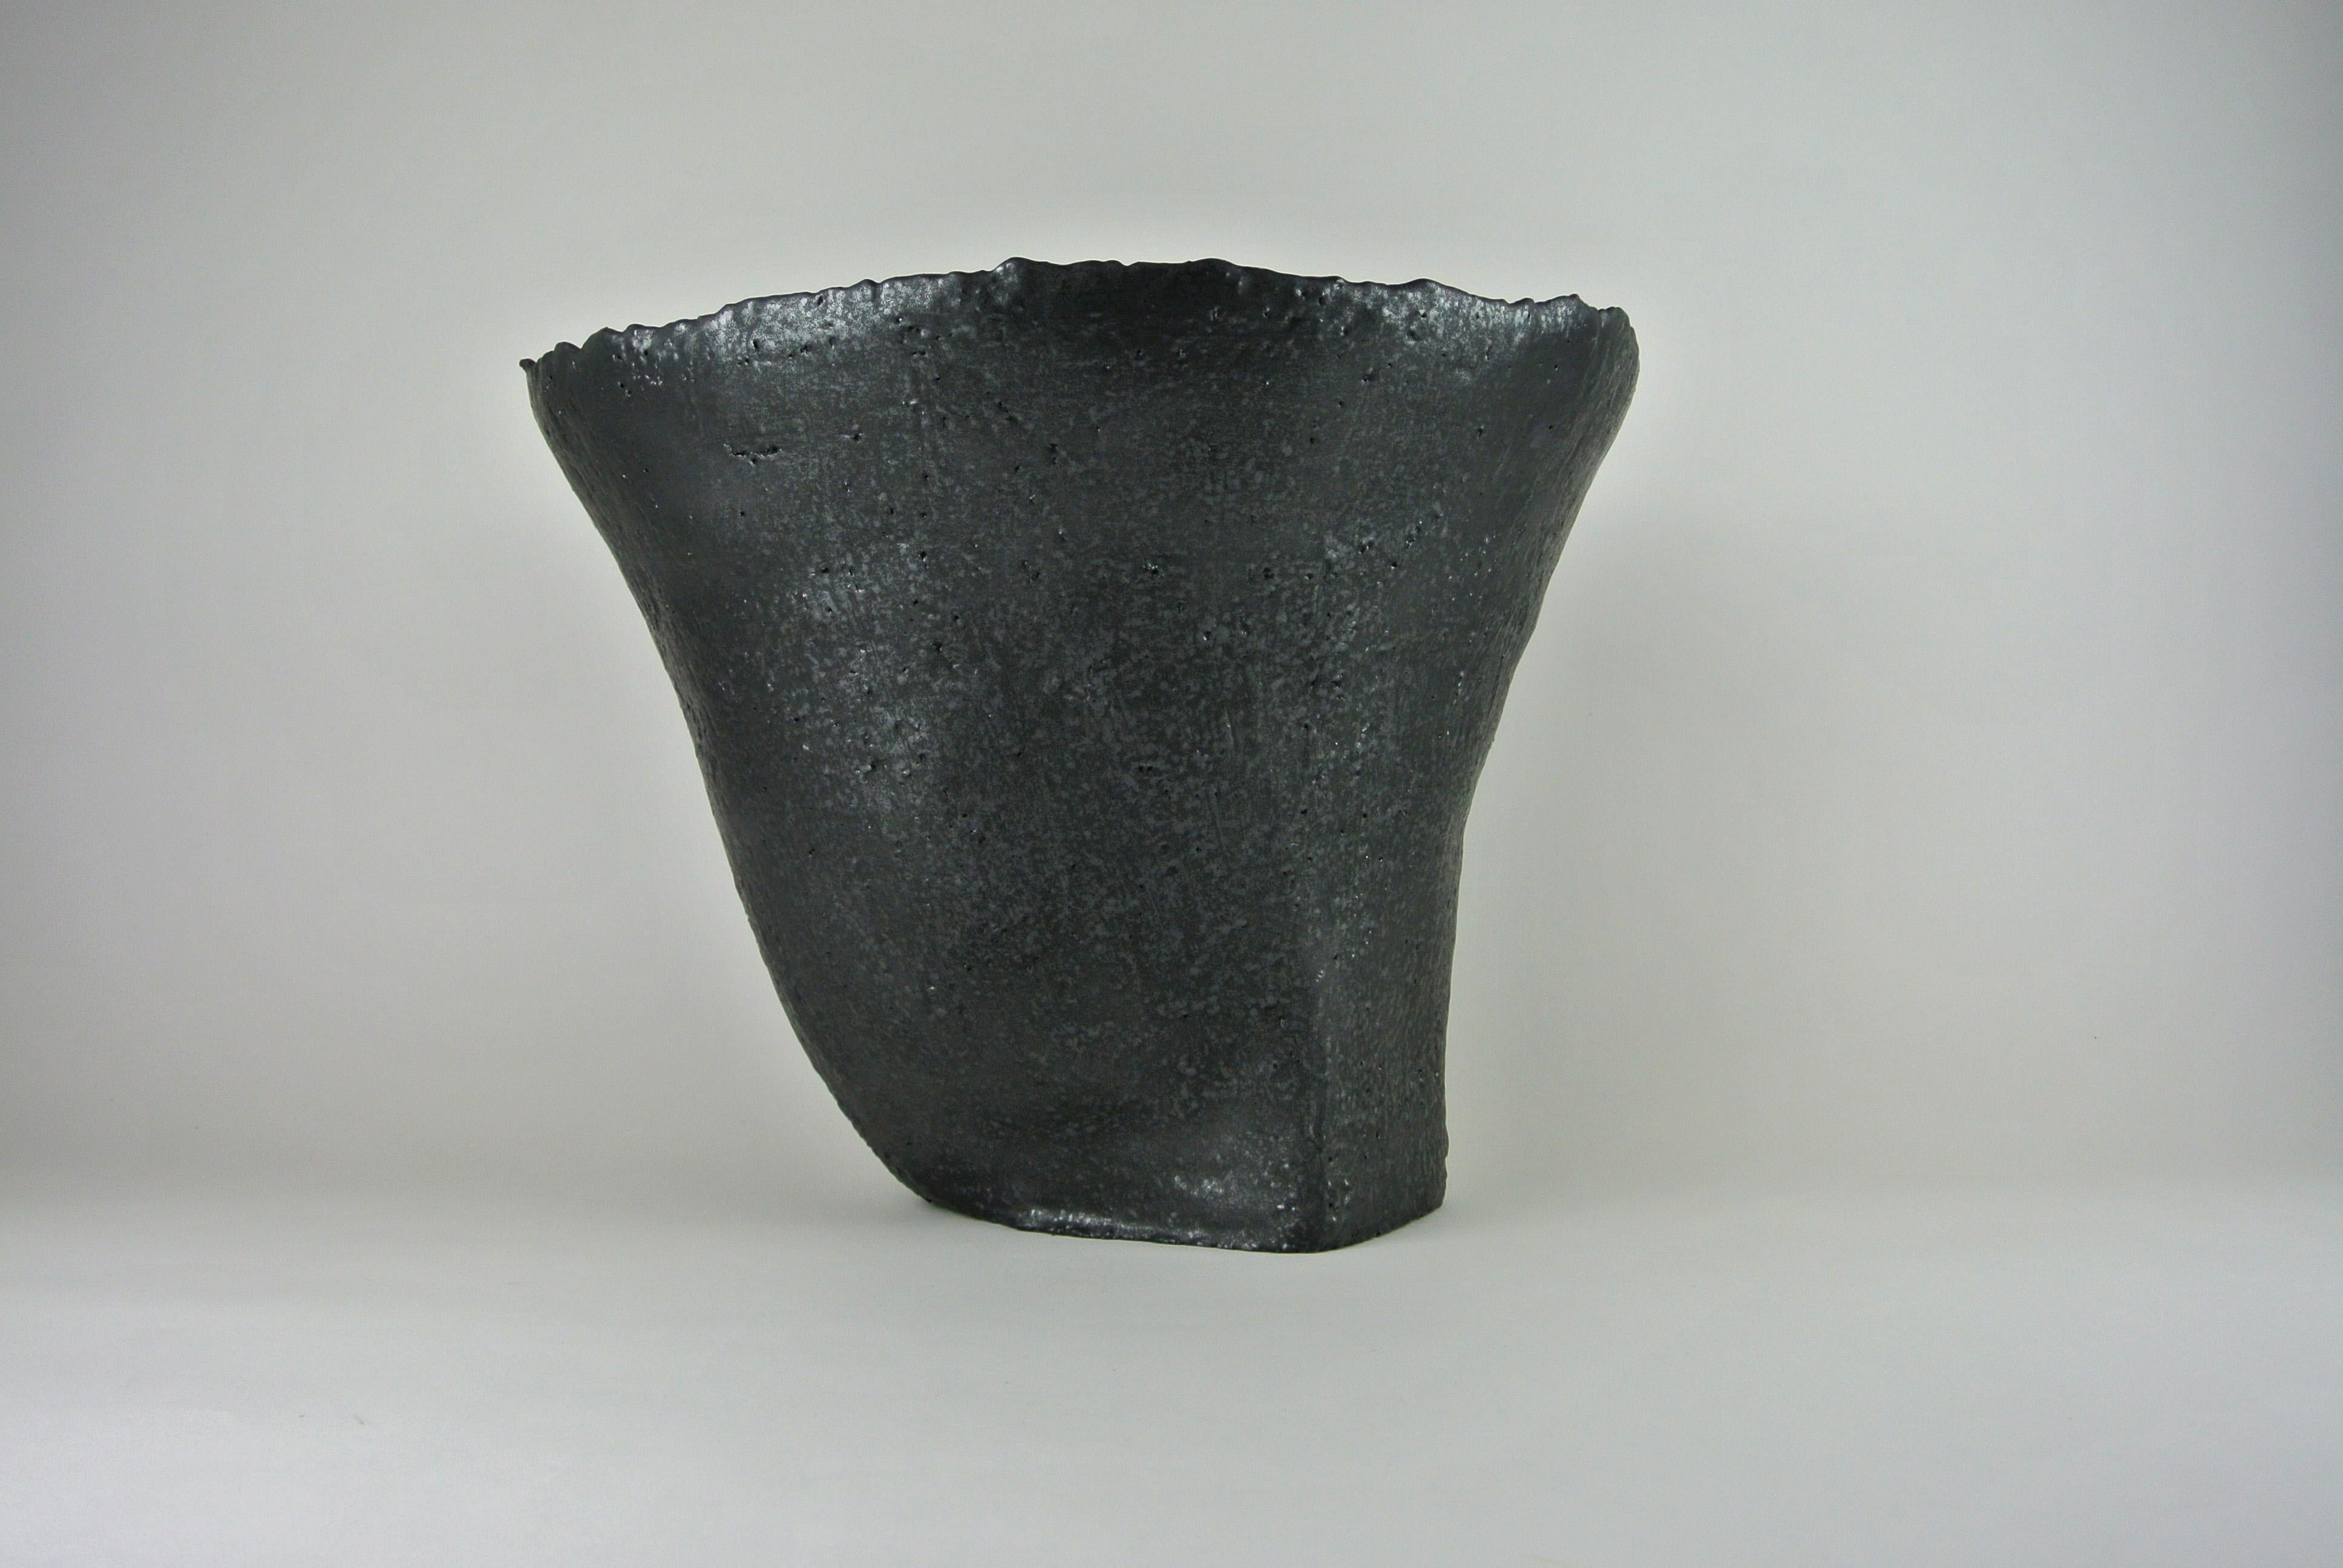 Organic Modern Massive Contemporary Vessel Grey Stoneware with Black Metallic Glaze